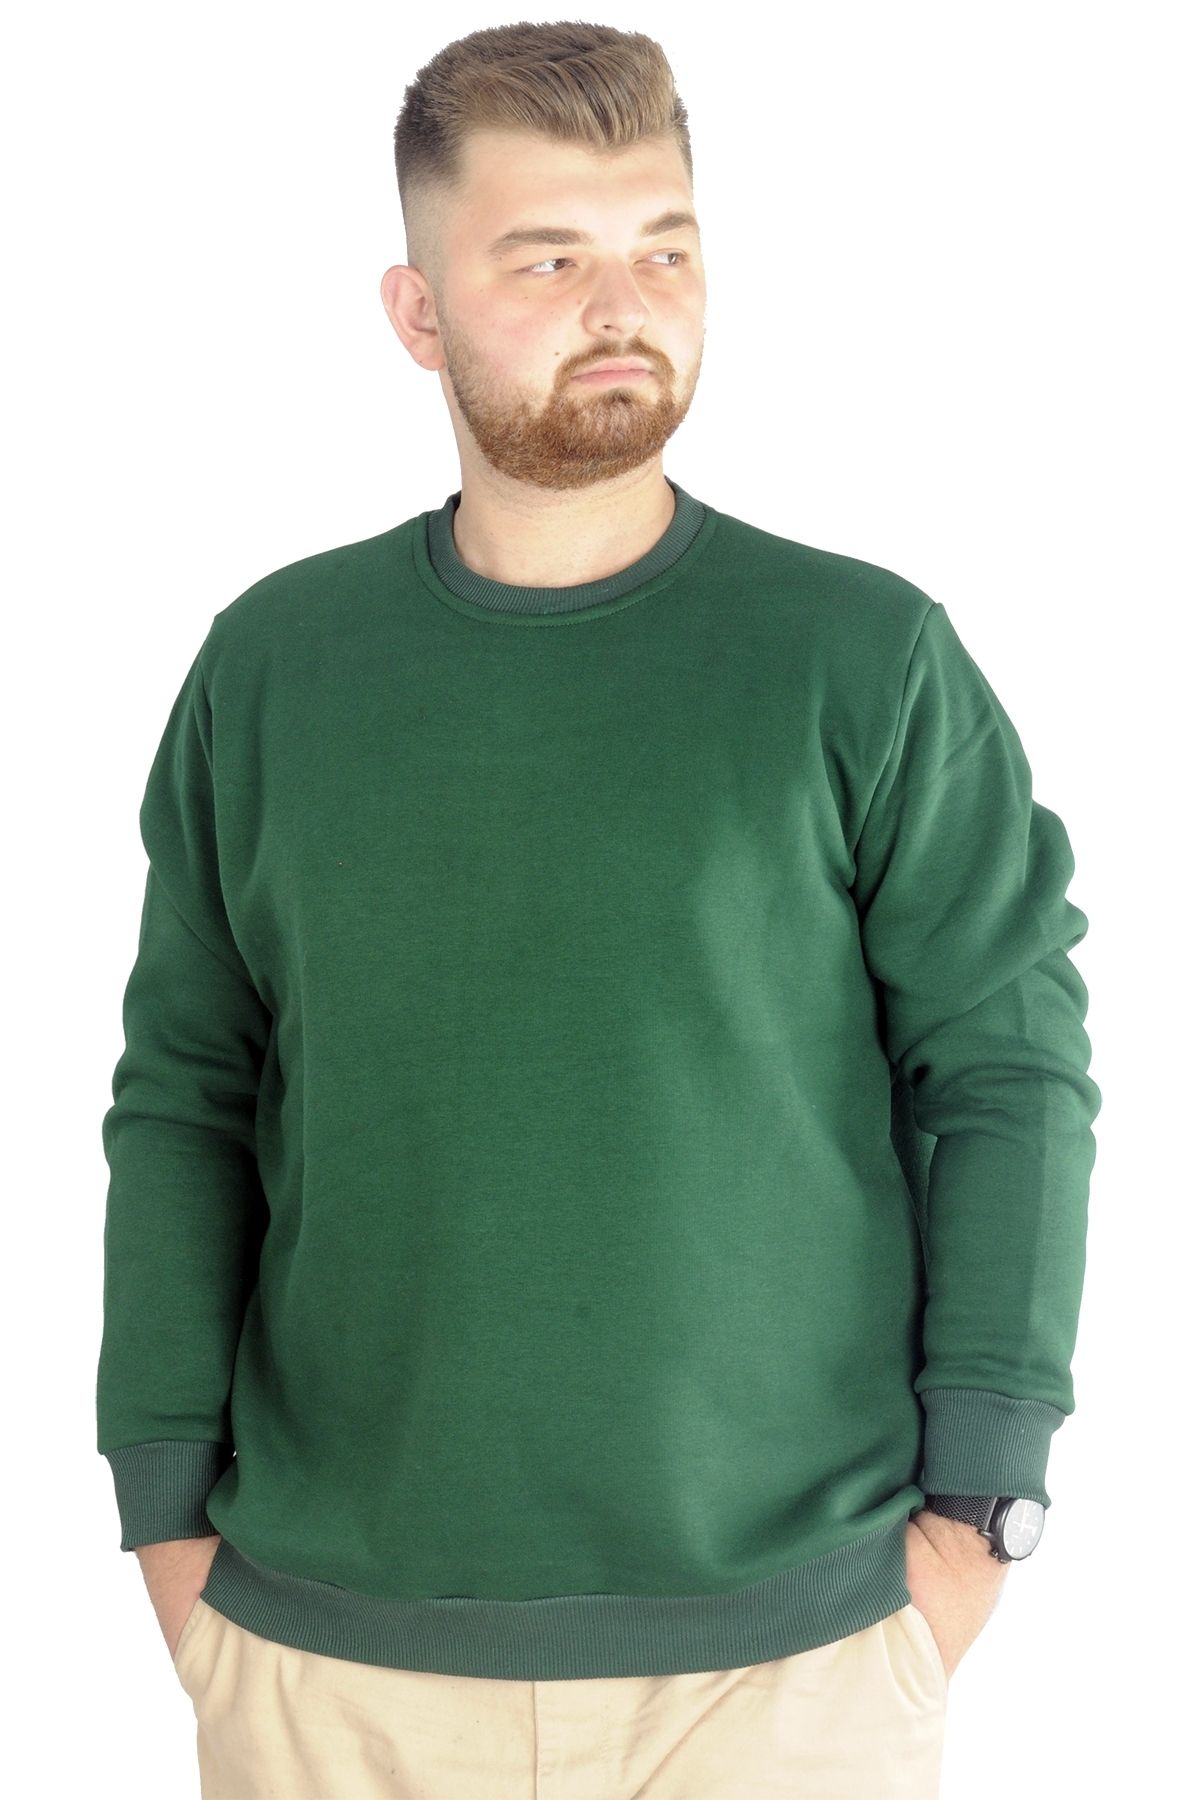 Modexl Mode Xl Büyük Beden Erkek Sweatshirt Basic 20131 Nefti